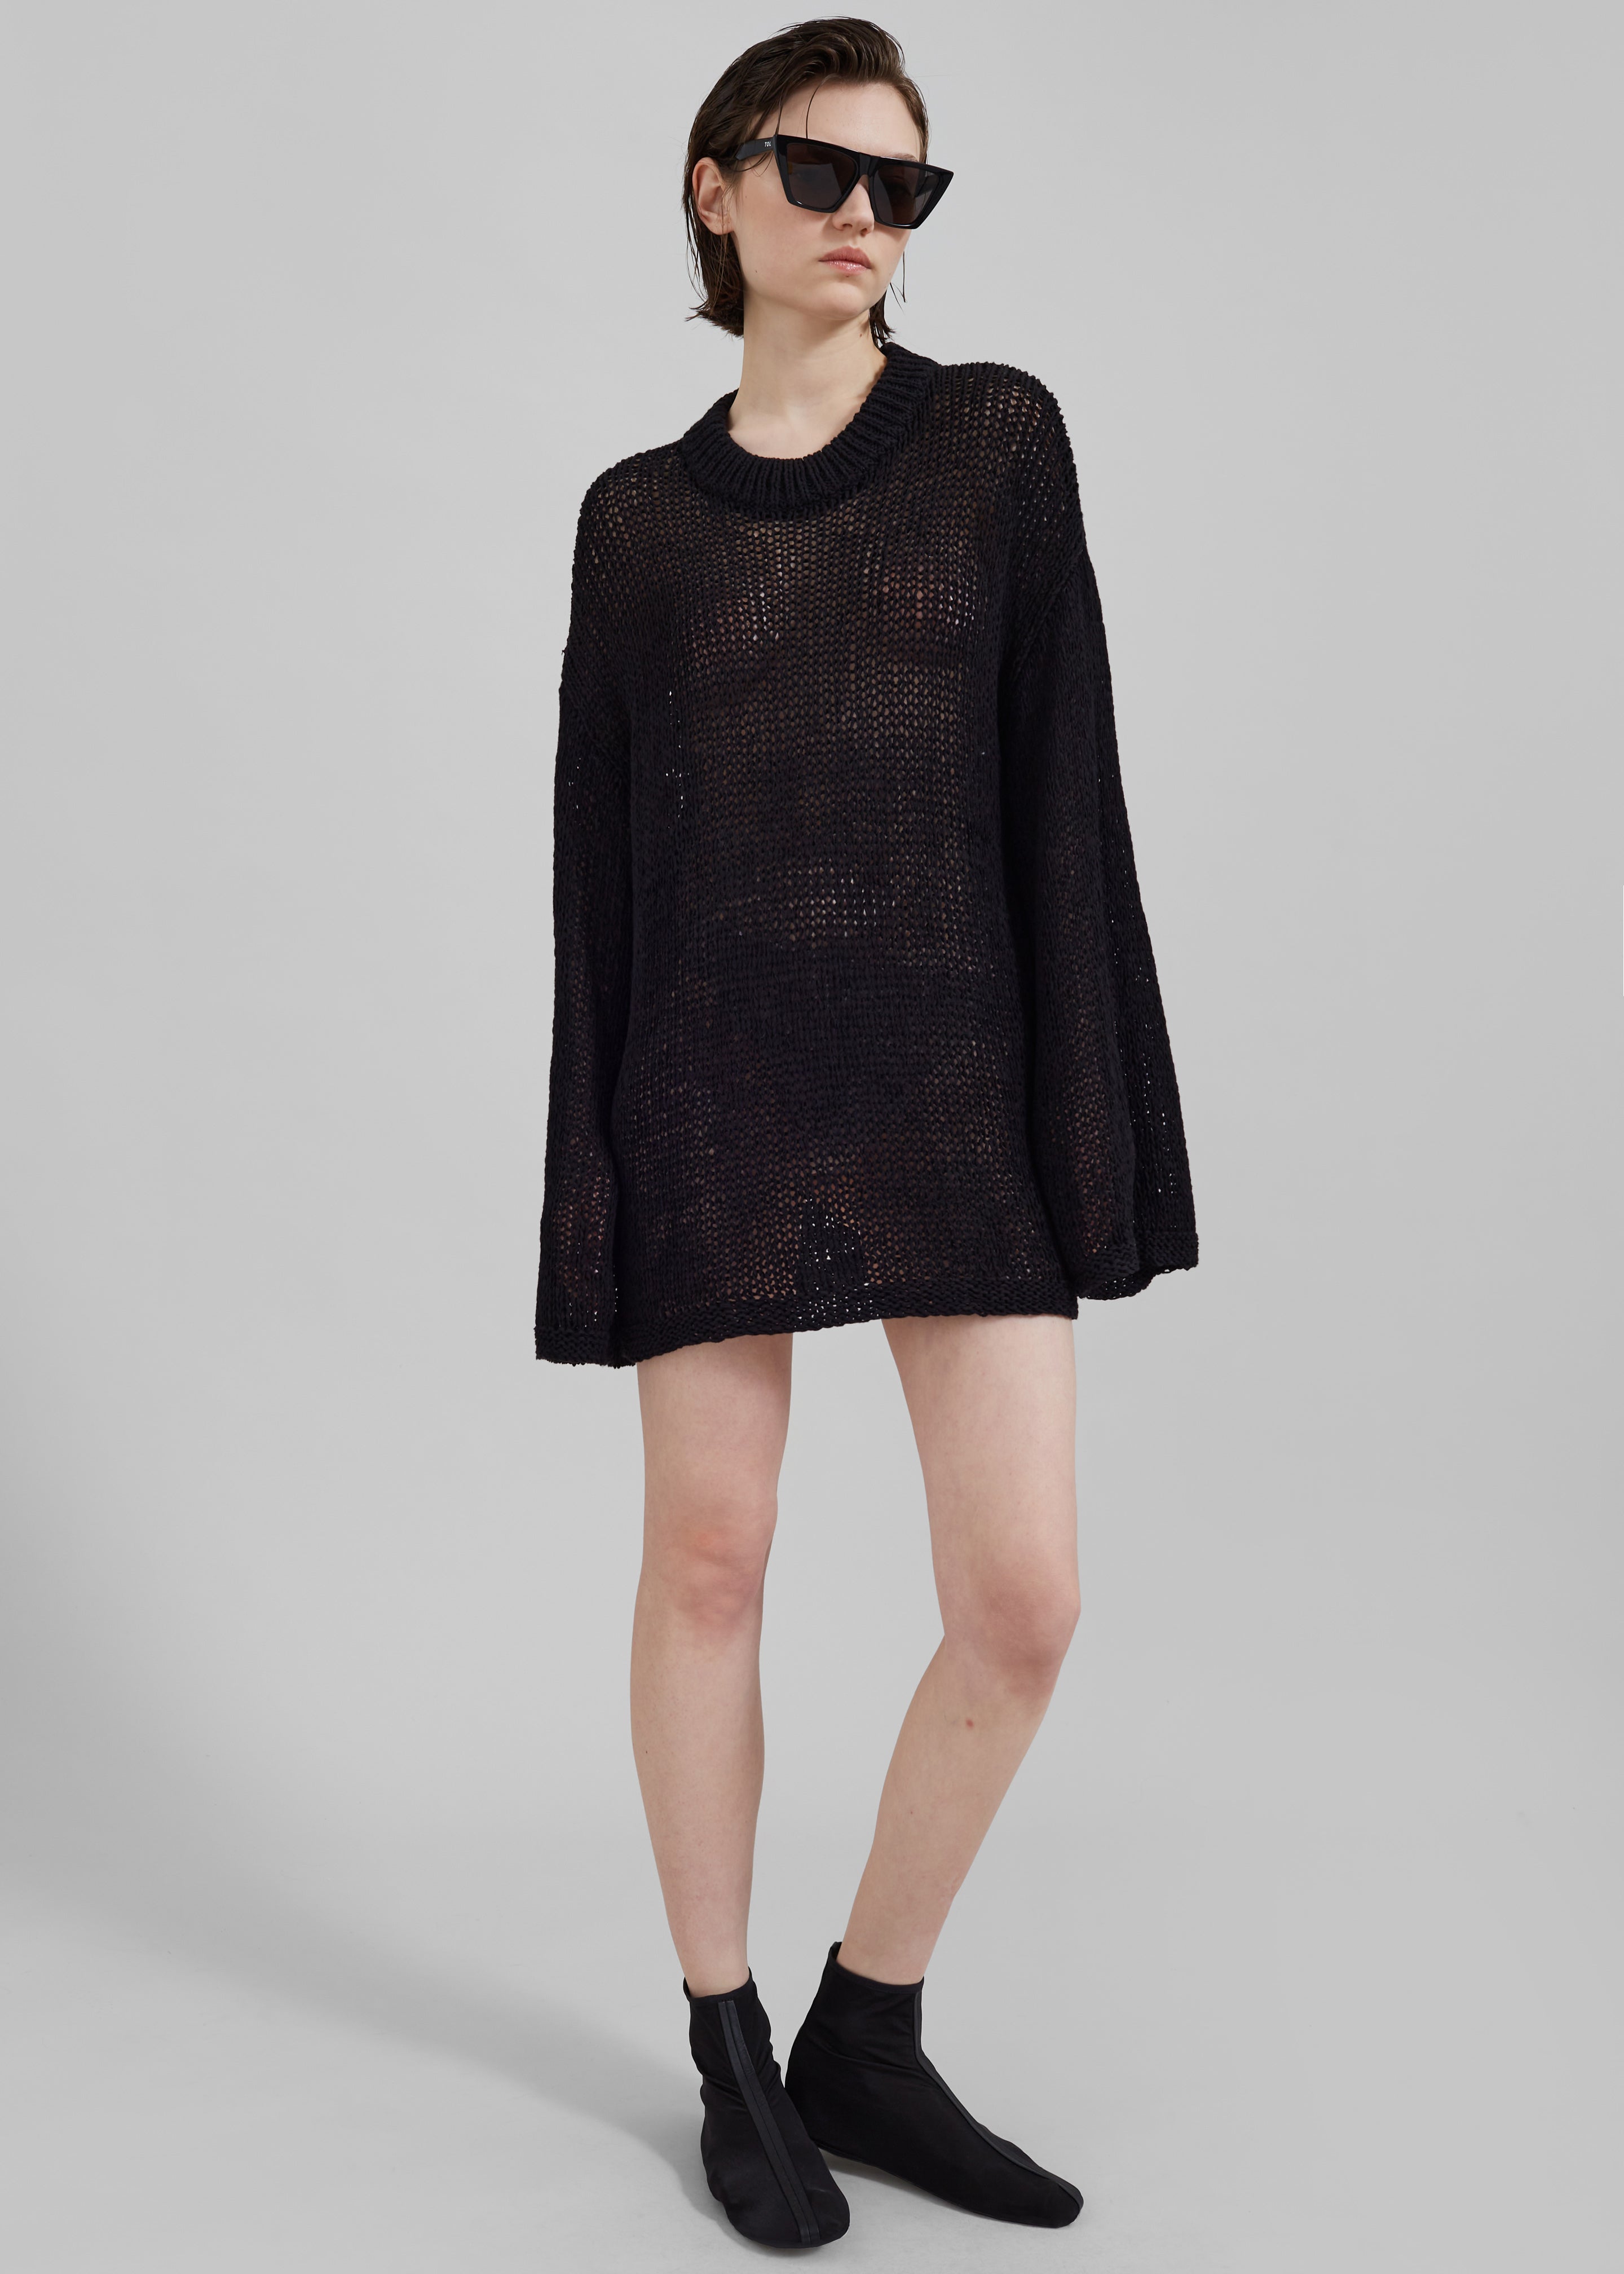 The Garment Literno Sweater - Black - 1